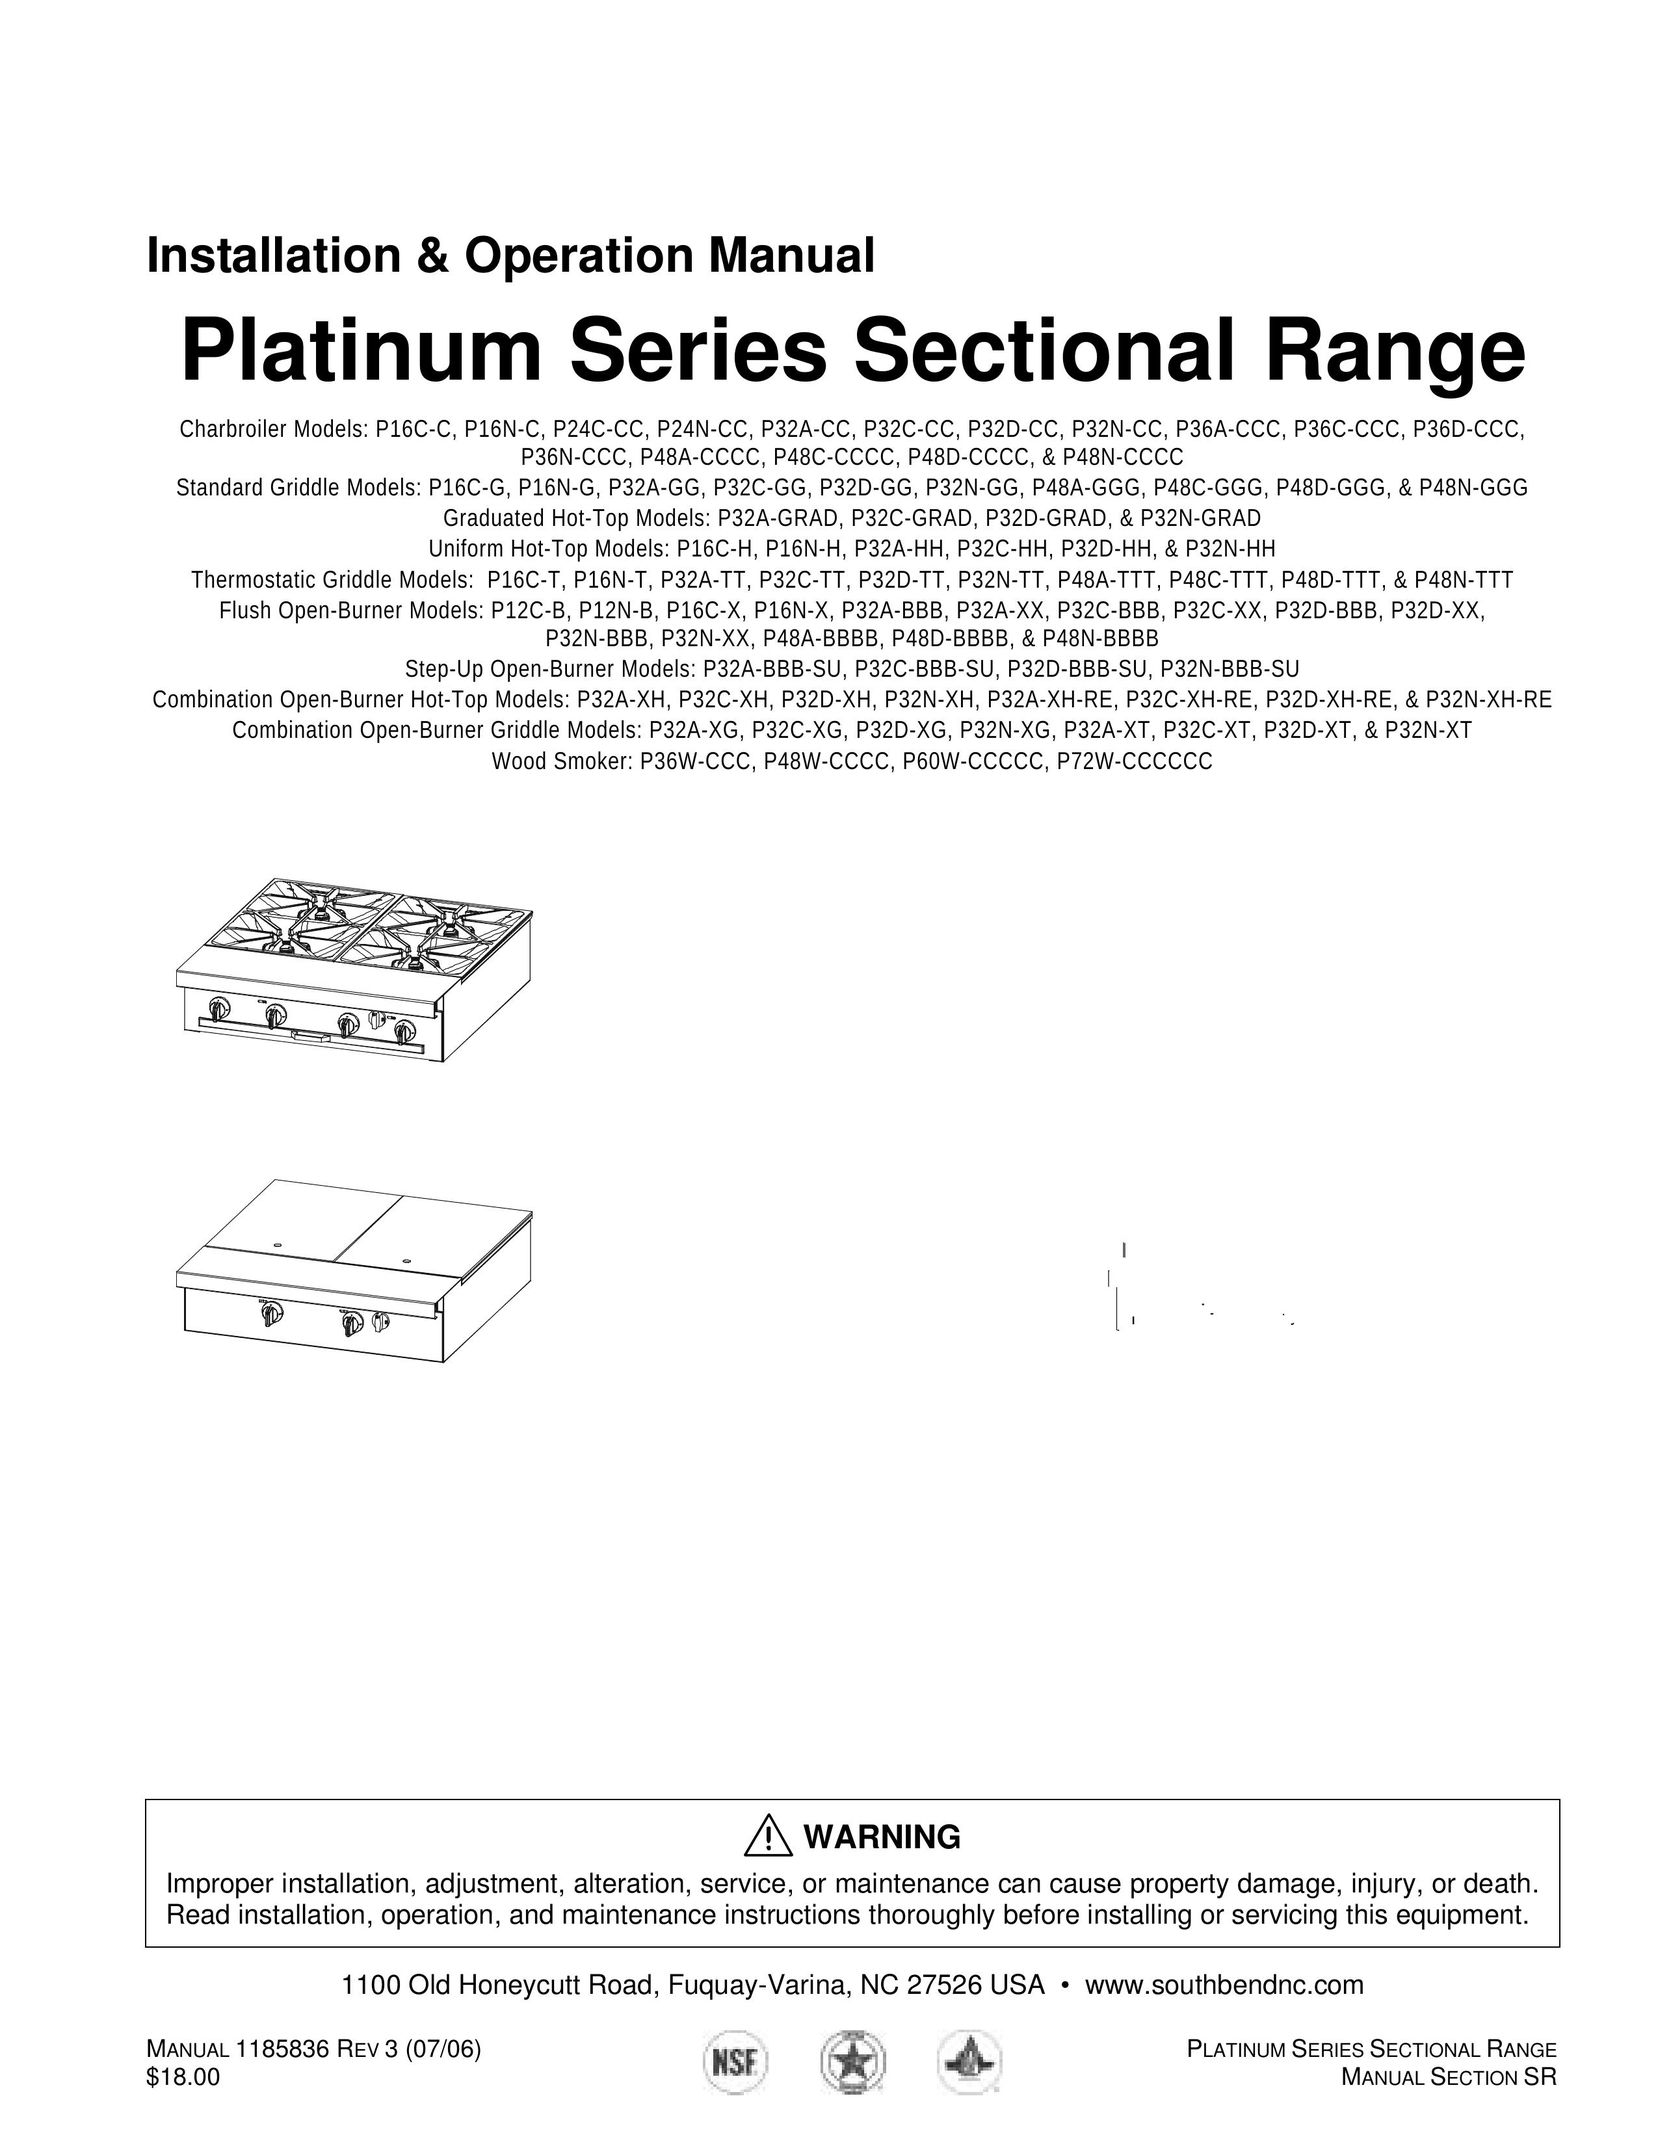 Southbend P16N-T Range User Manual